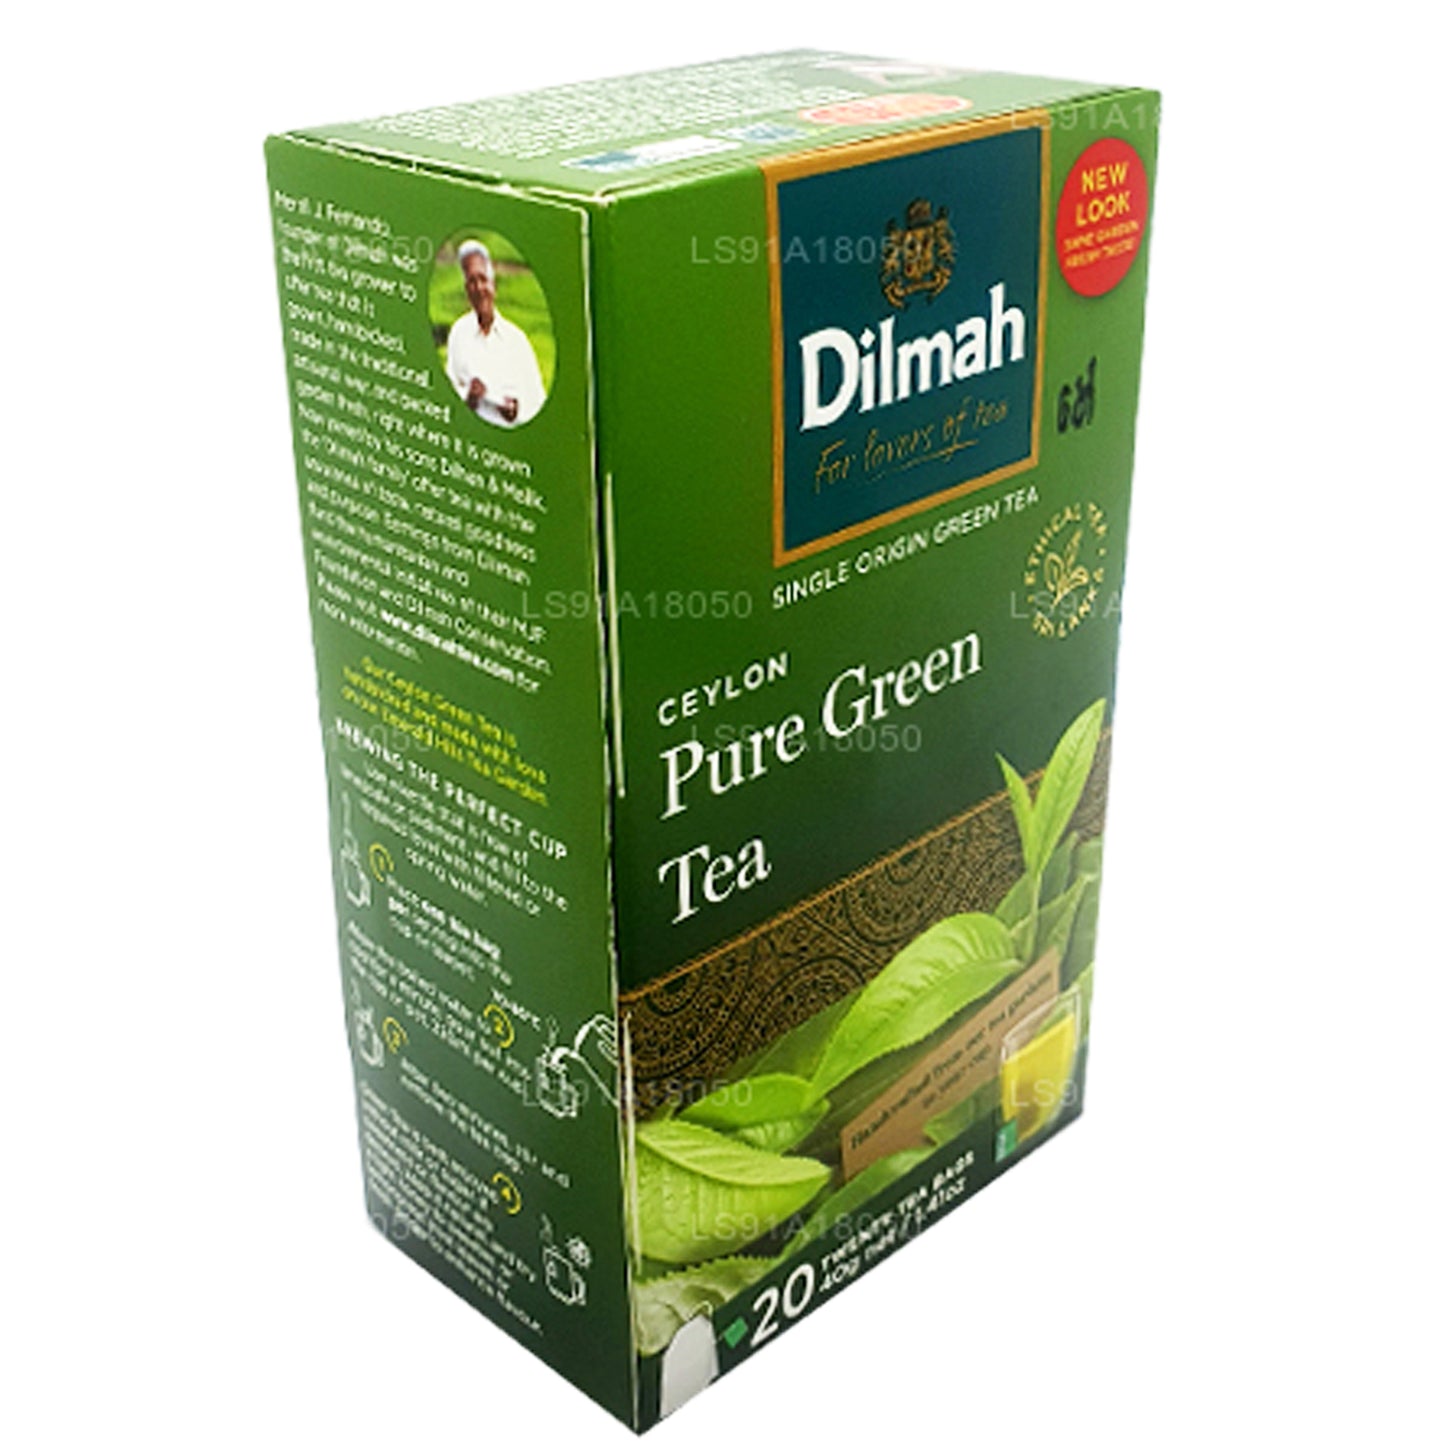 Dilmah Pure Ceylon Green Tea (40g) 20 Tea Bags